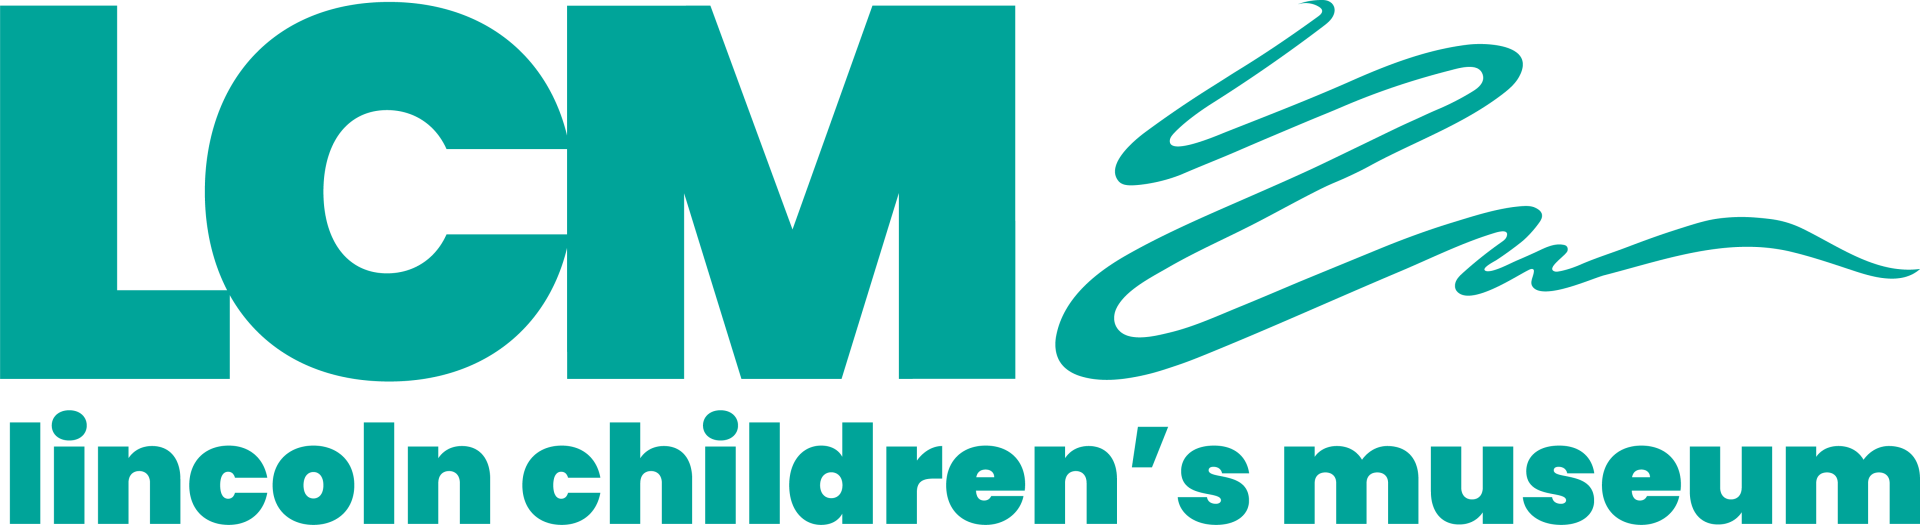 Lincoln Children's Museum Teal Logo